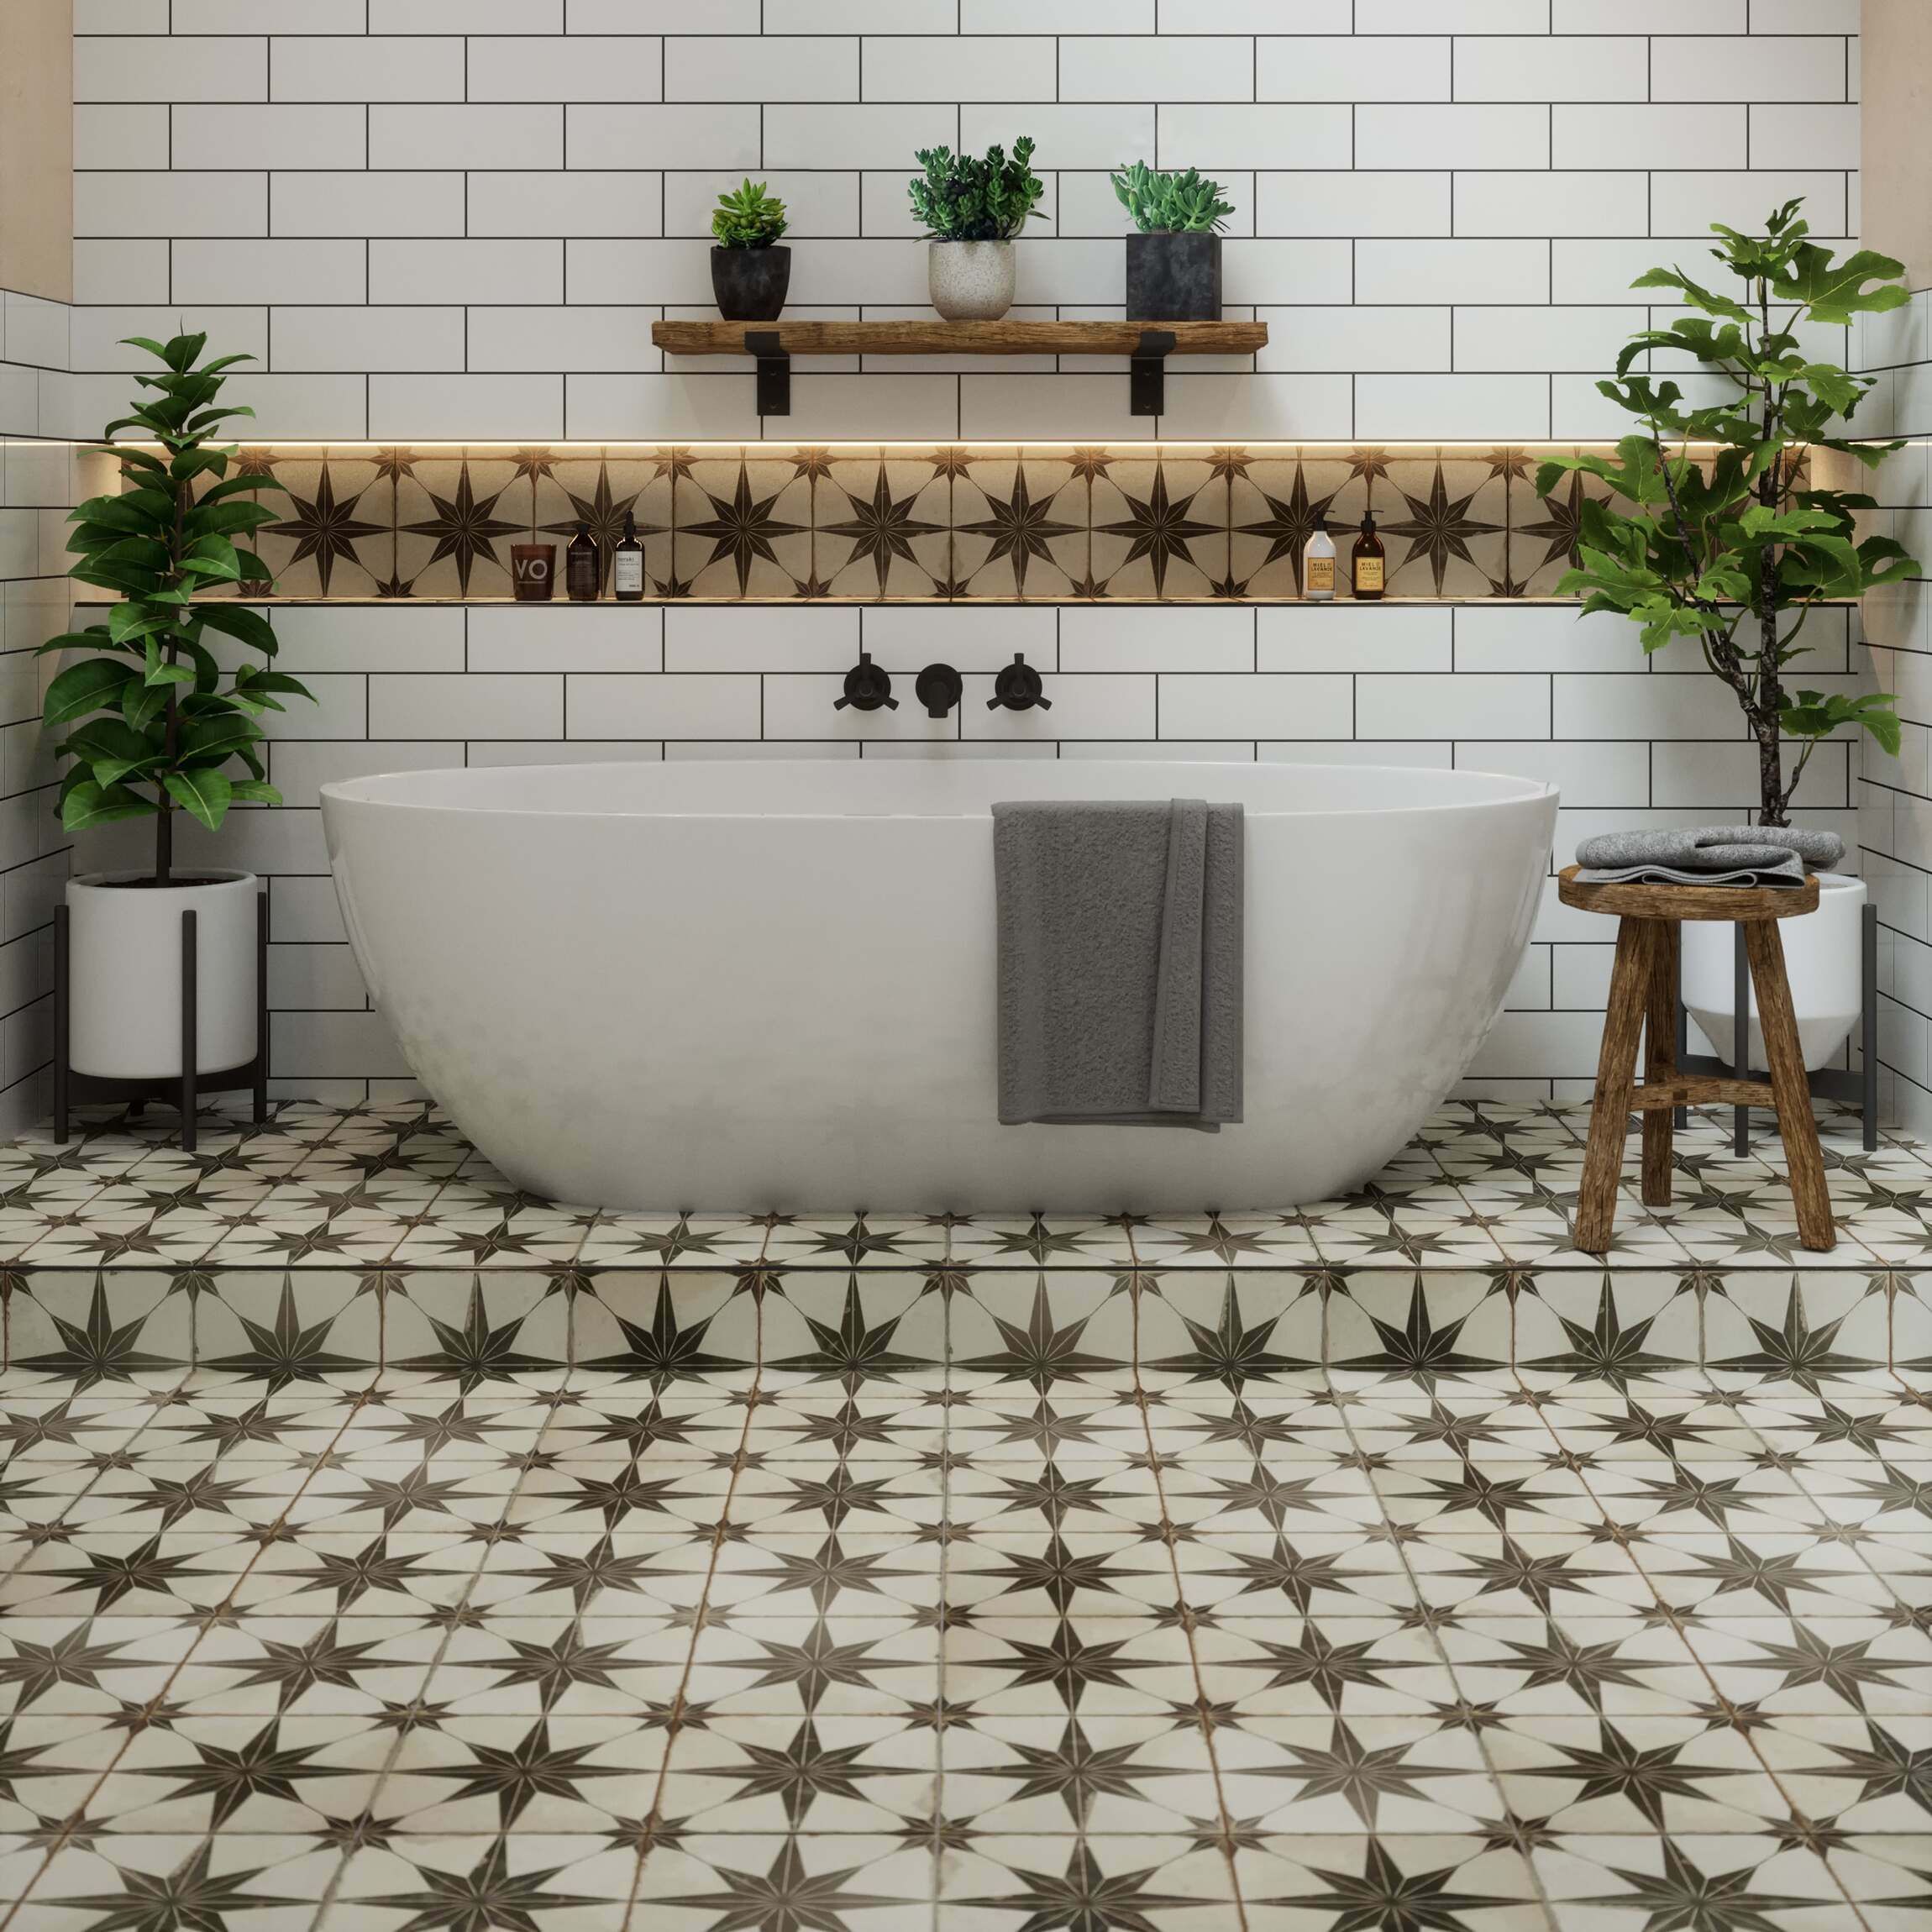 450x450 Tiles From Tile Mountain, Photos Of Bathroom Floor Tiles